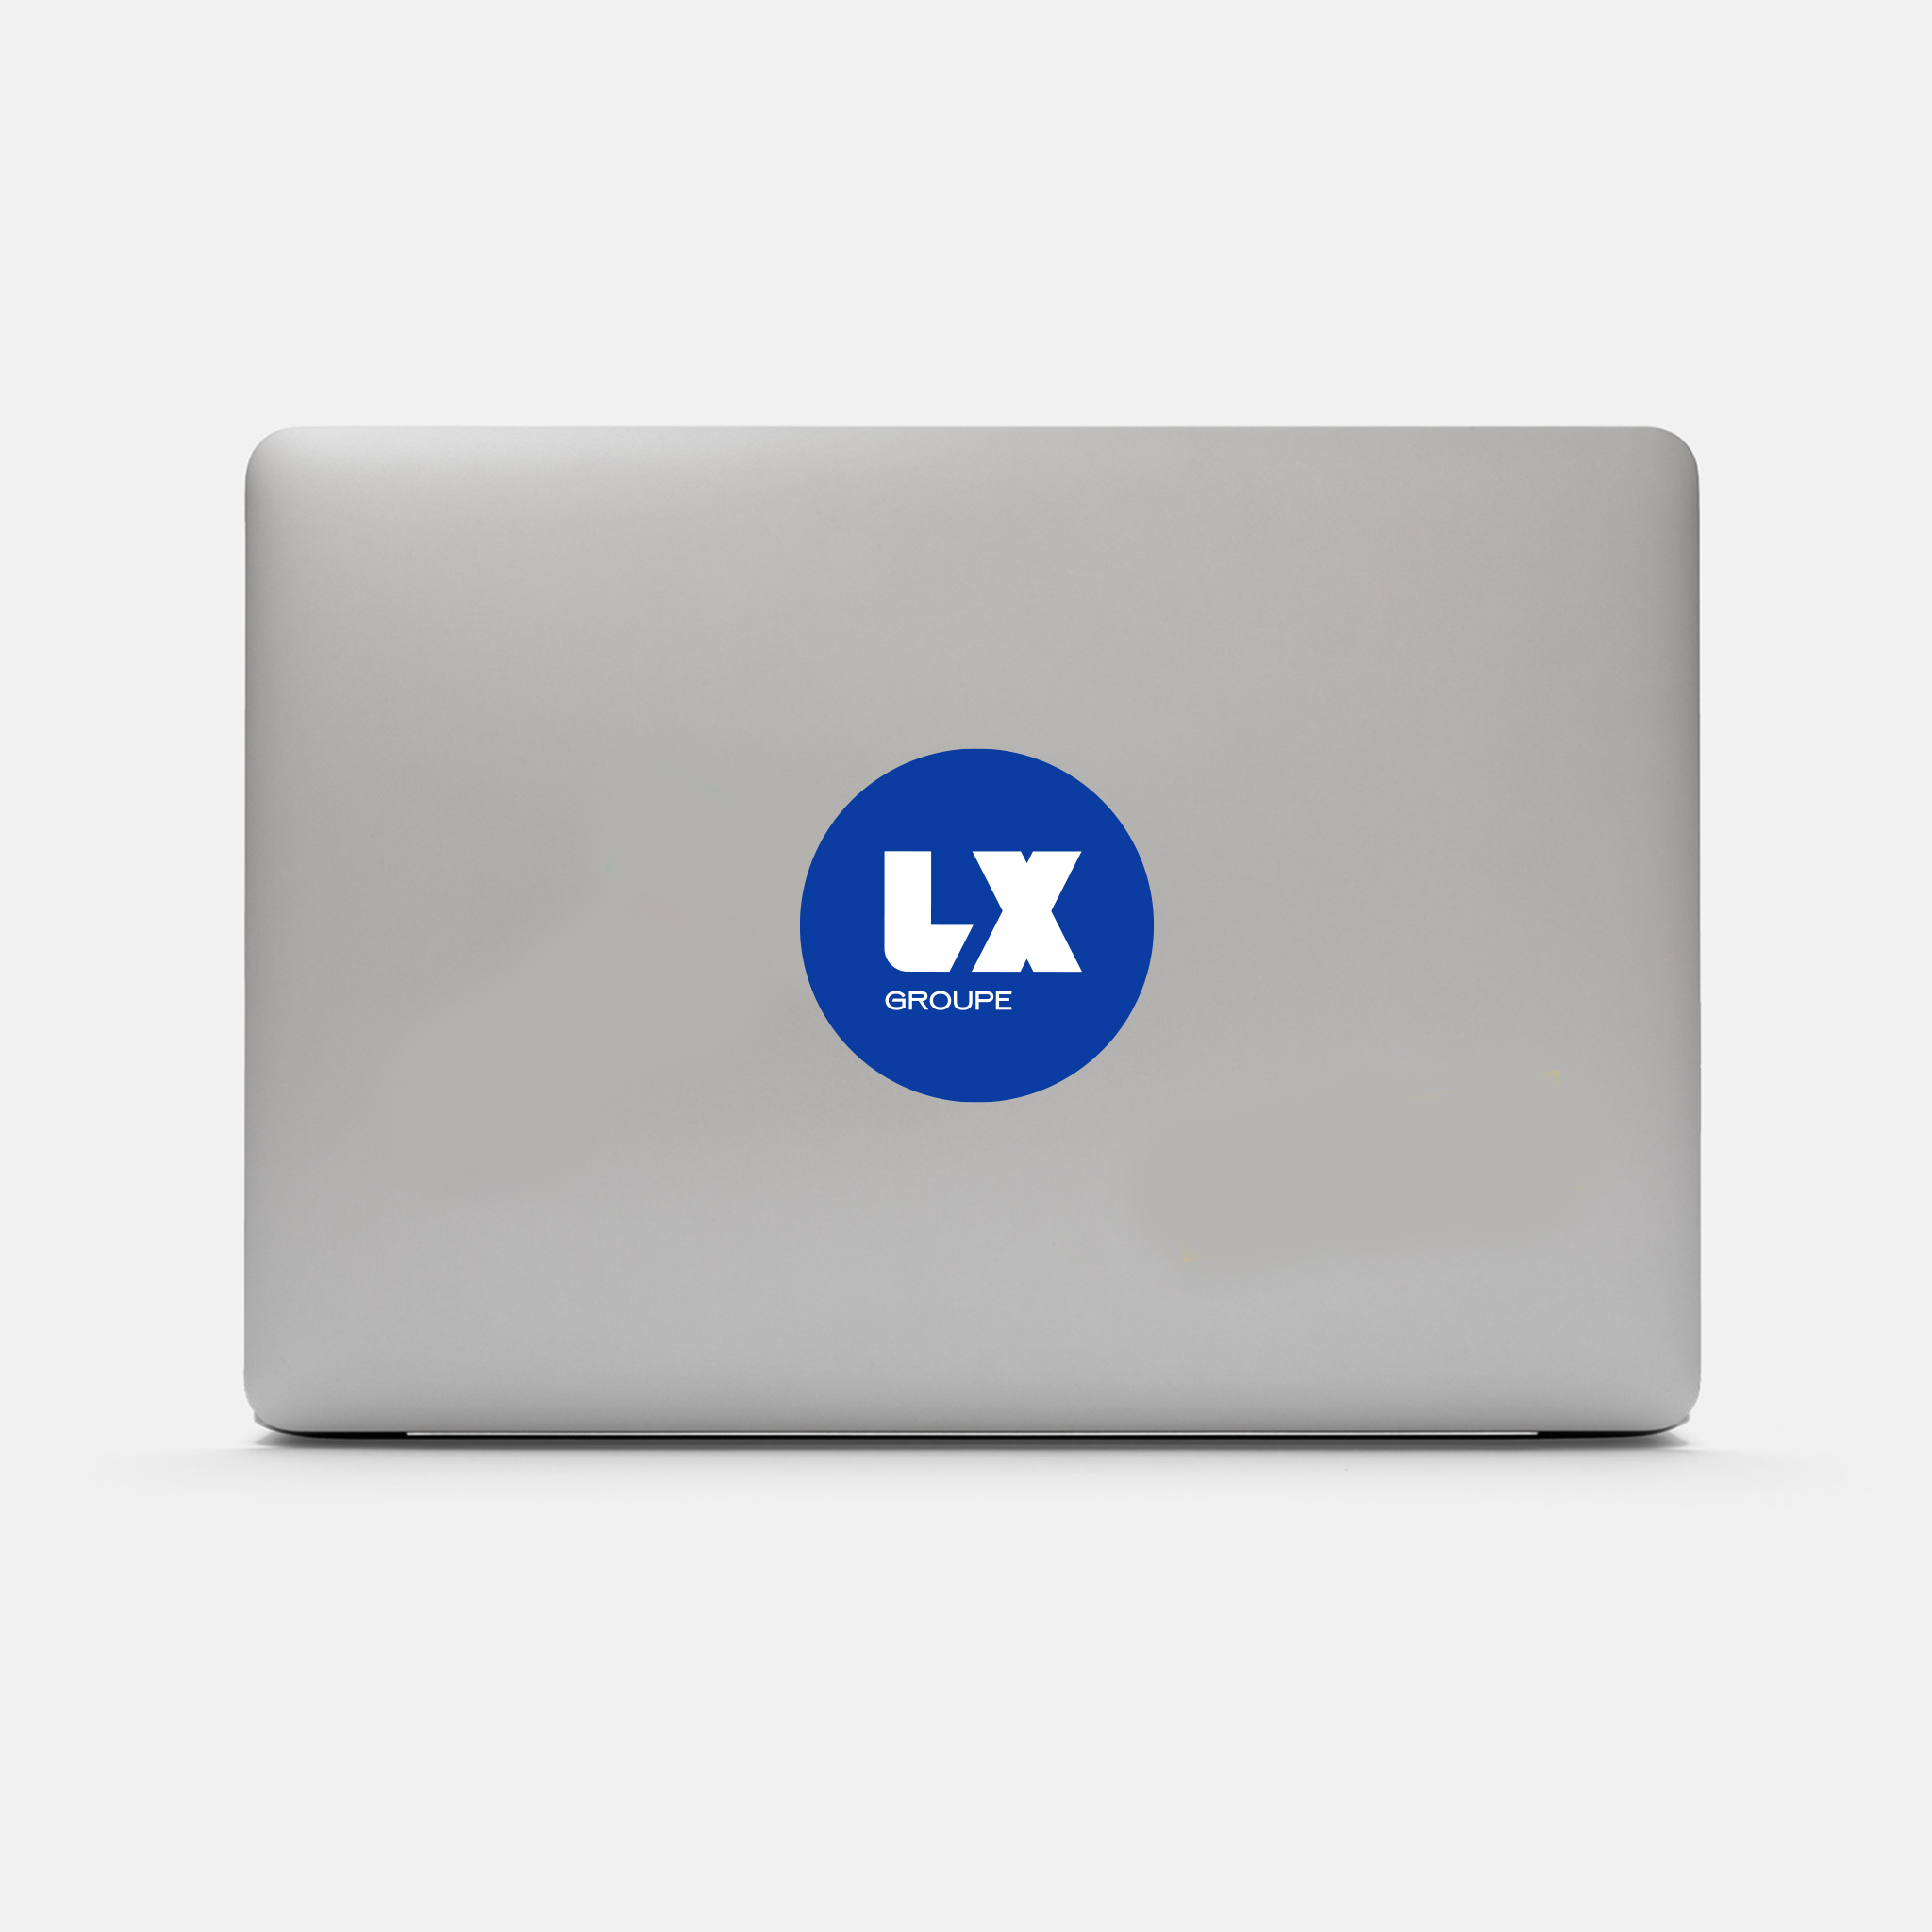 LX-branding-goodies